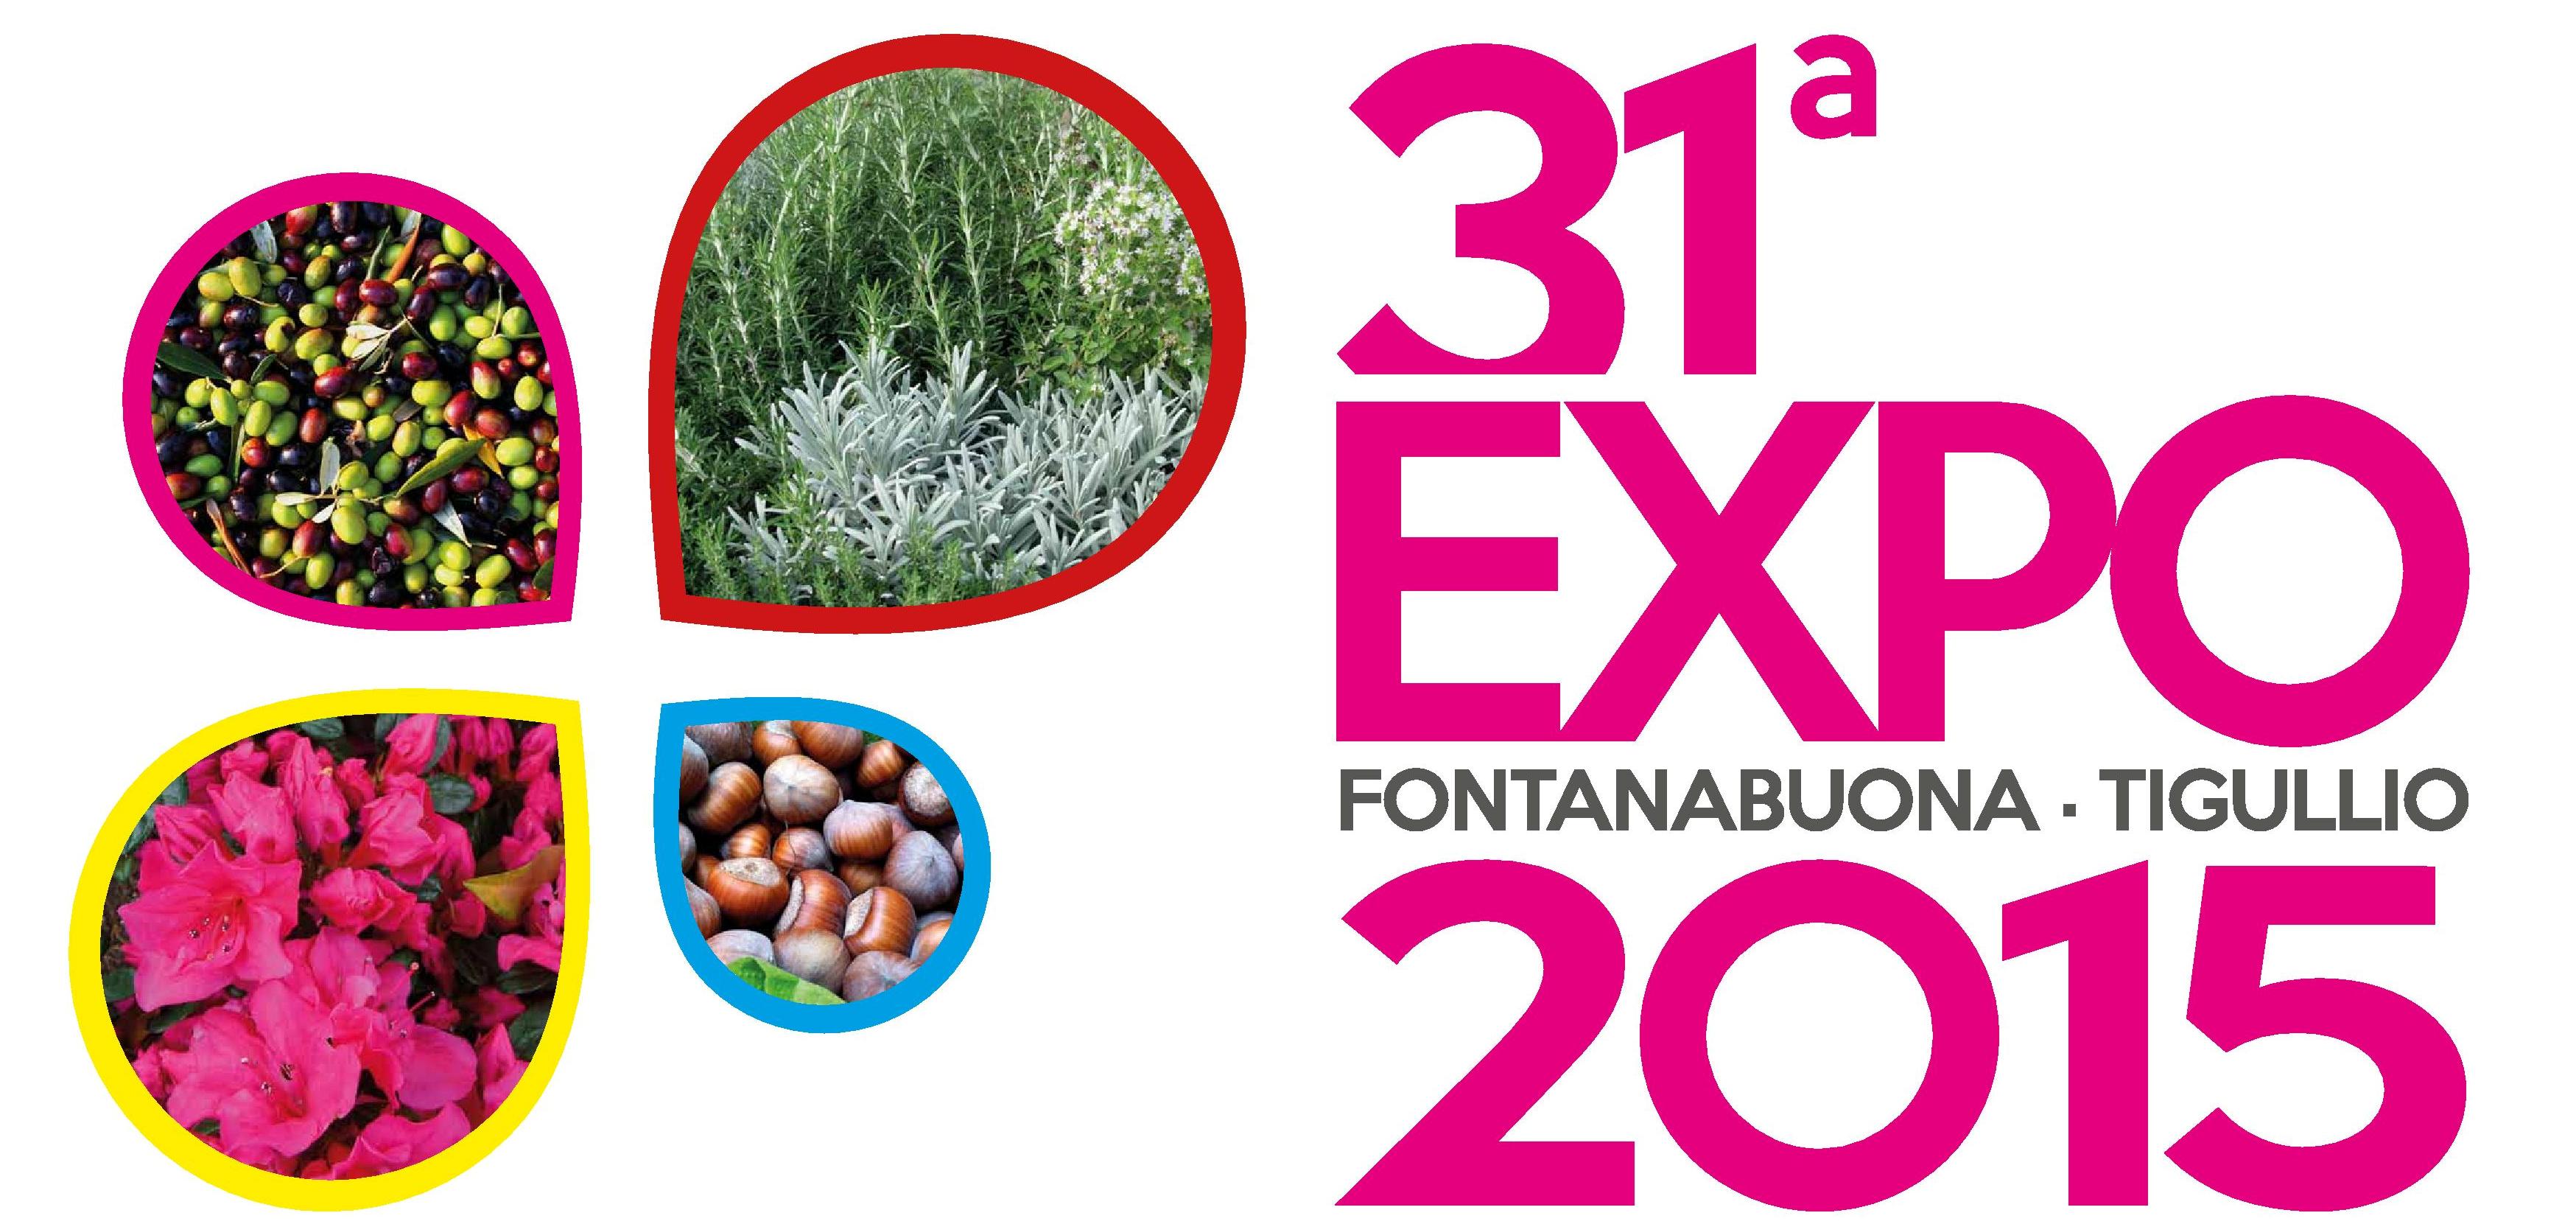 Expo Fontanabuona: inaugurata la cerimonia di apertura